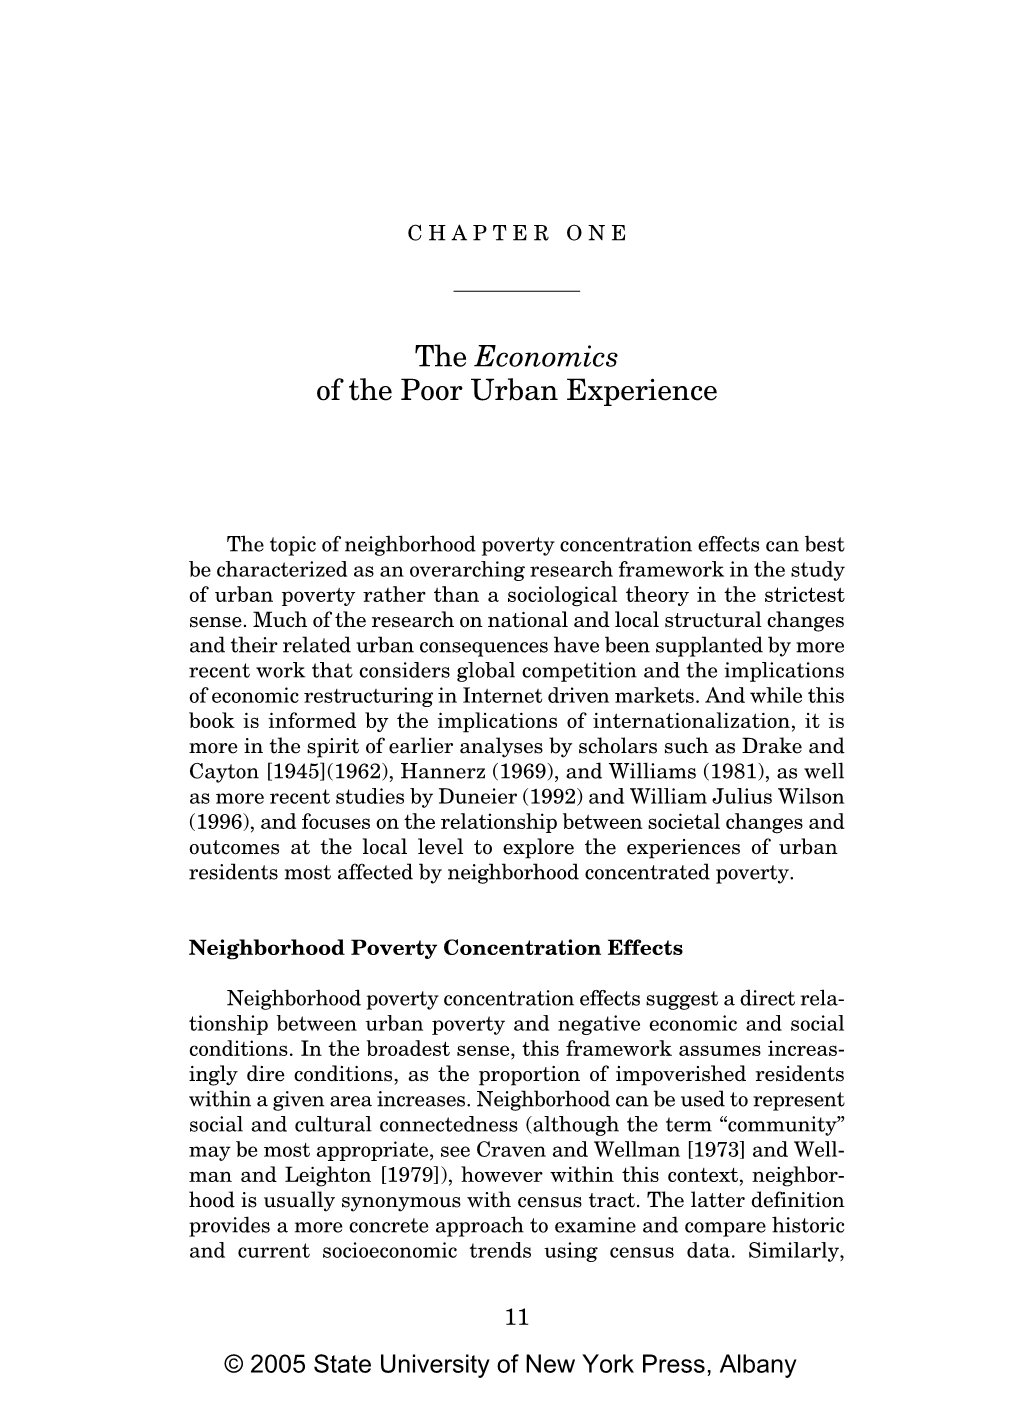 The Economics of the Poor Urban Experience